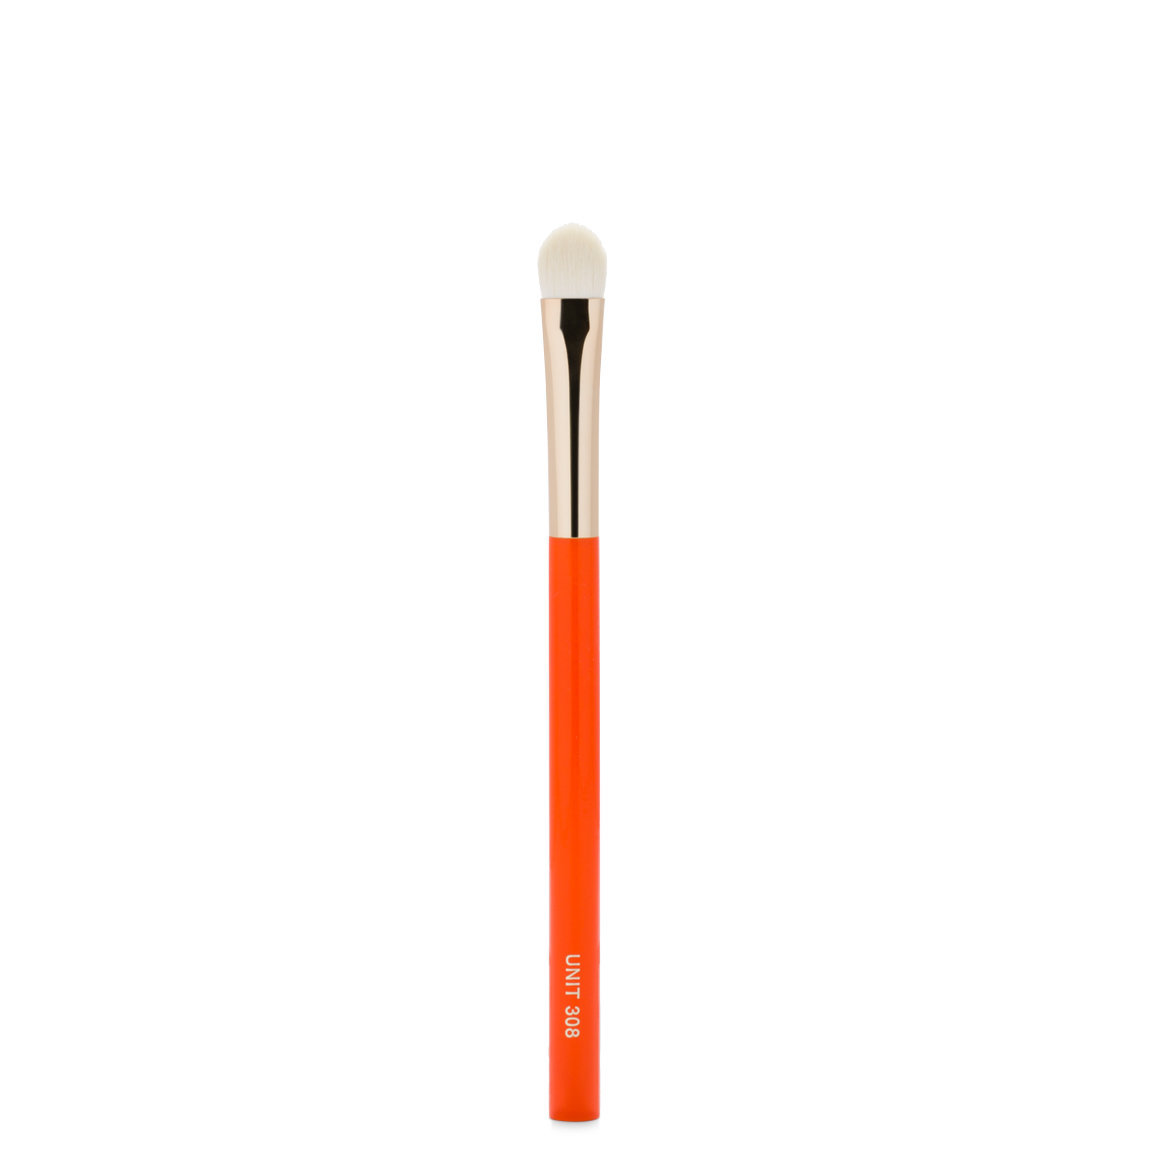 UNITS Orange Series UNIT 308 Flat Eye Brush alternative view 1 - product swatch.